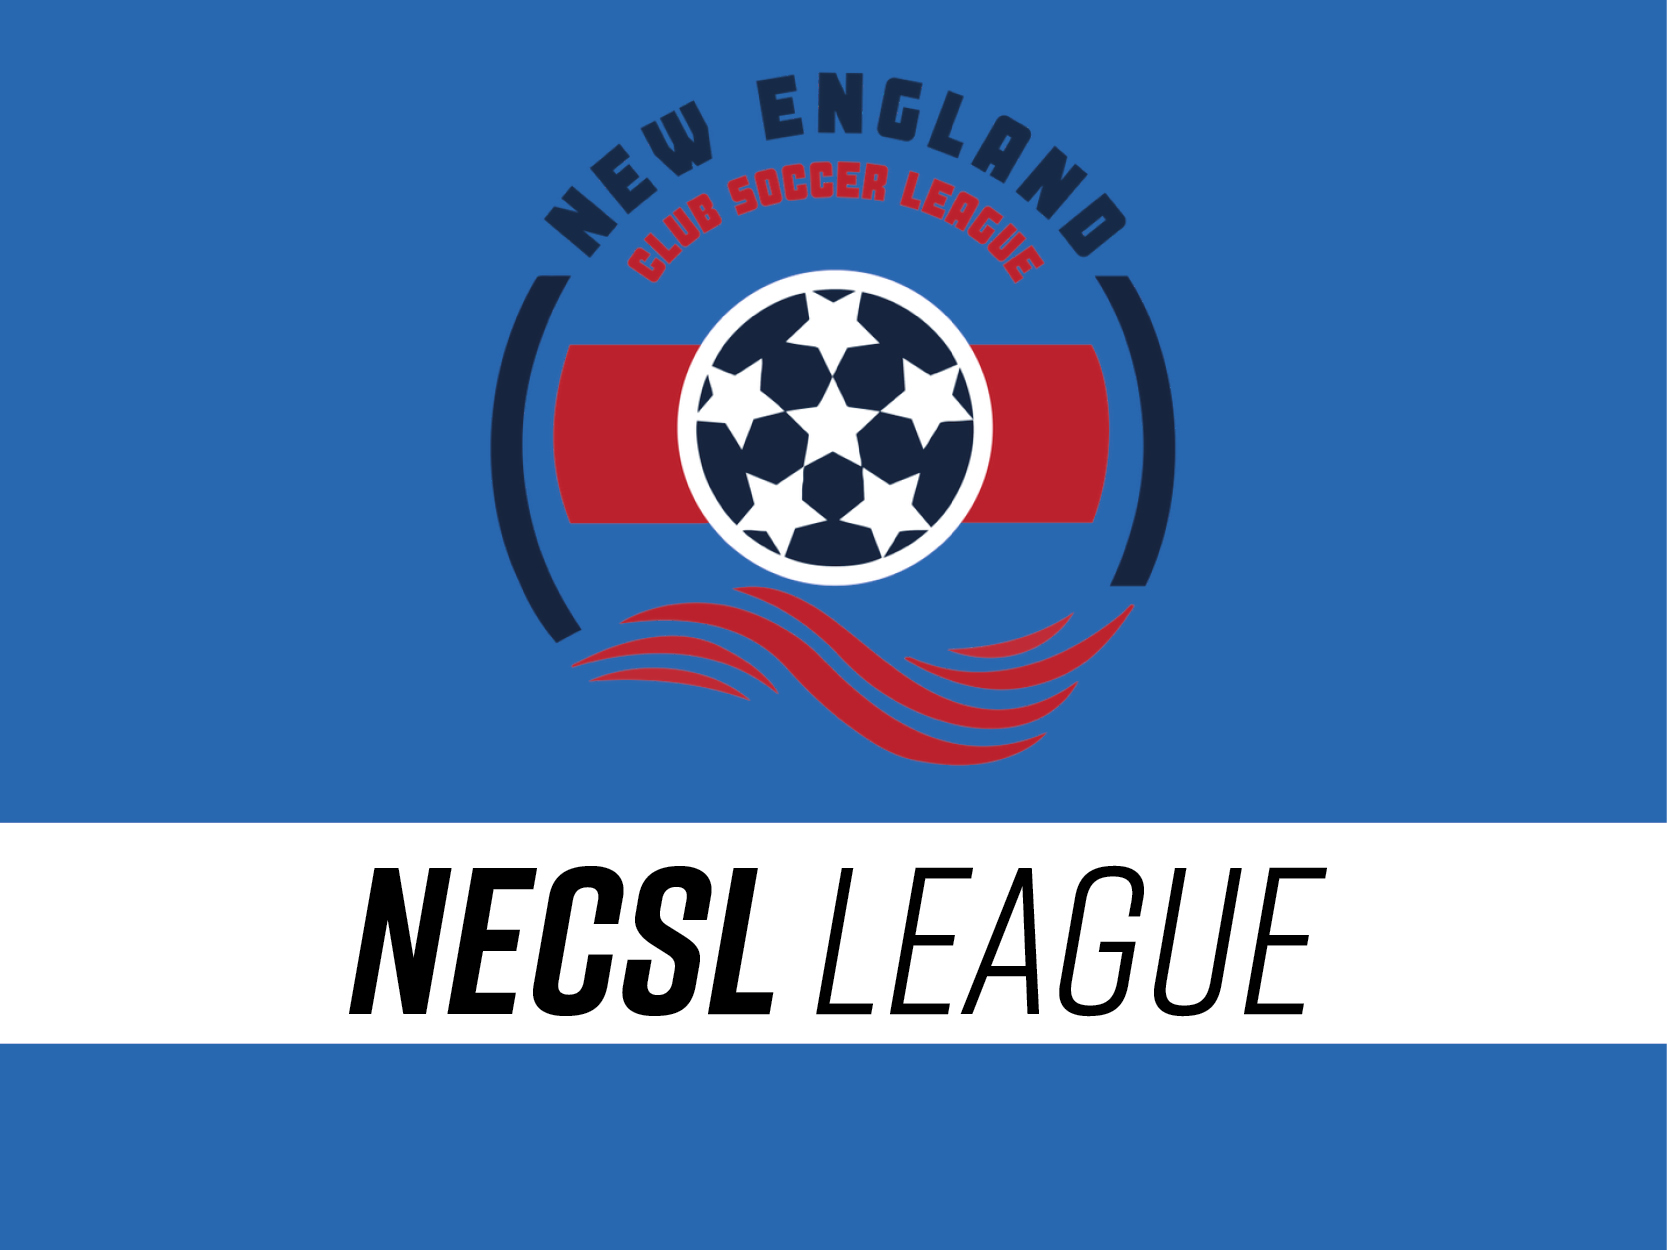 NESCL League logo